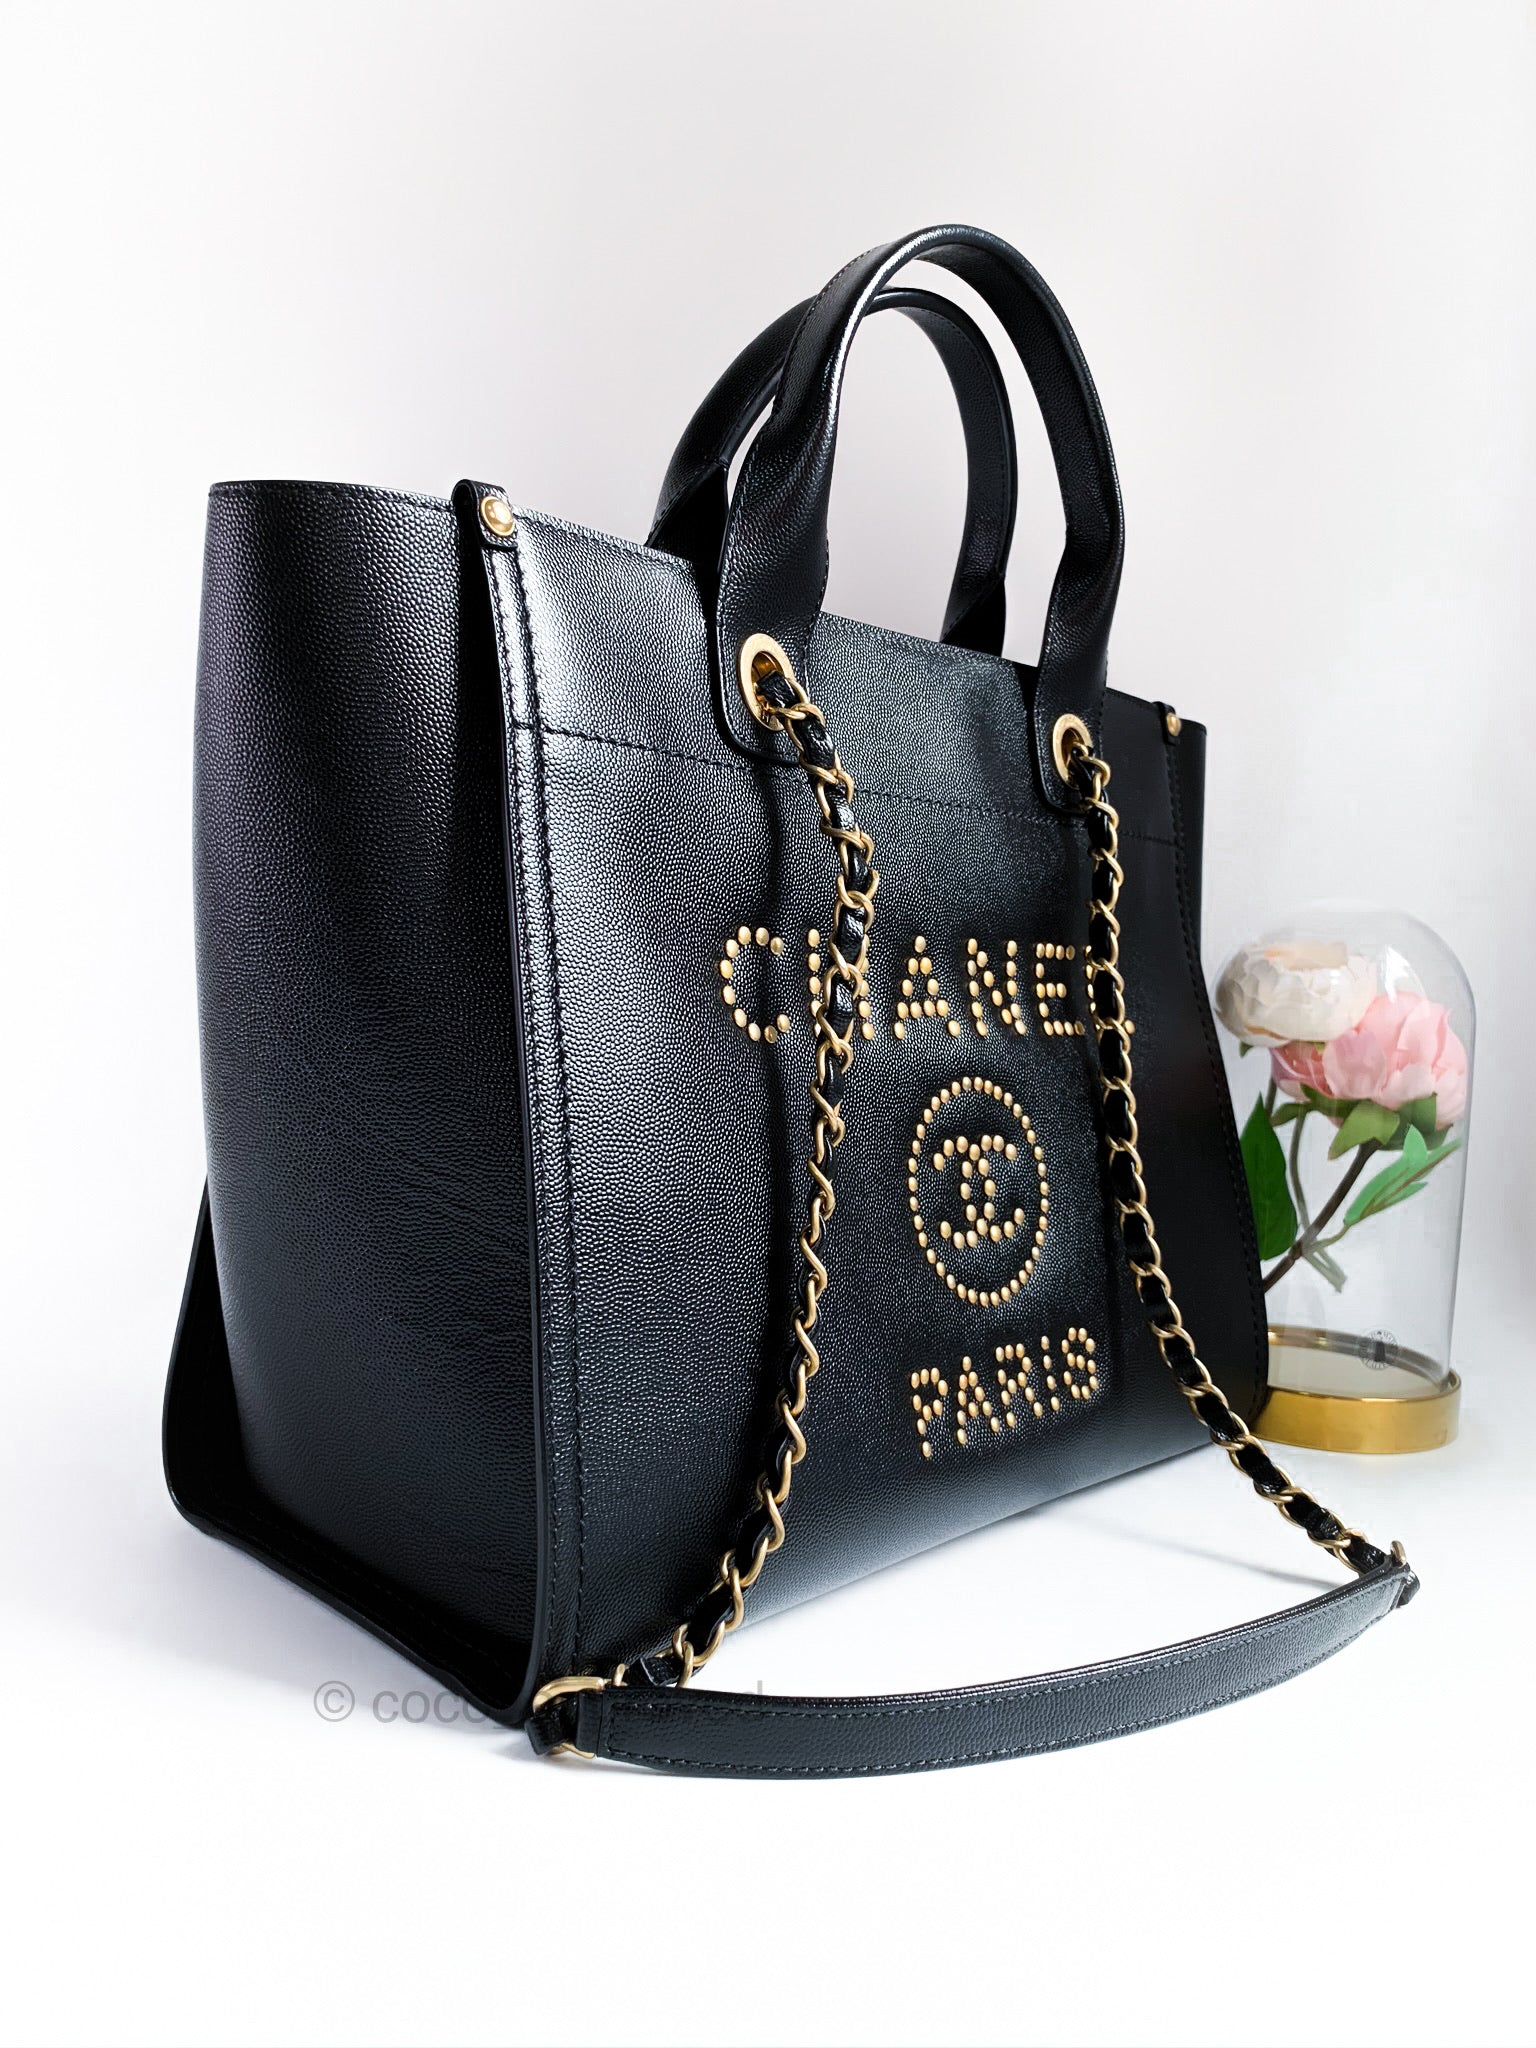 chanel black and gold handbag purse